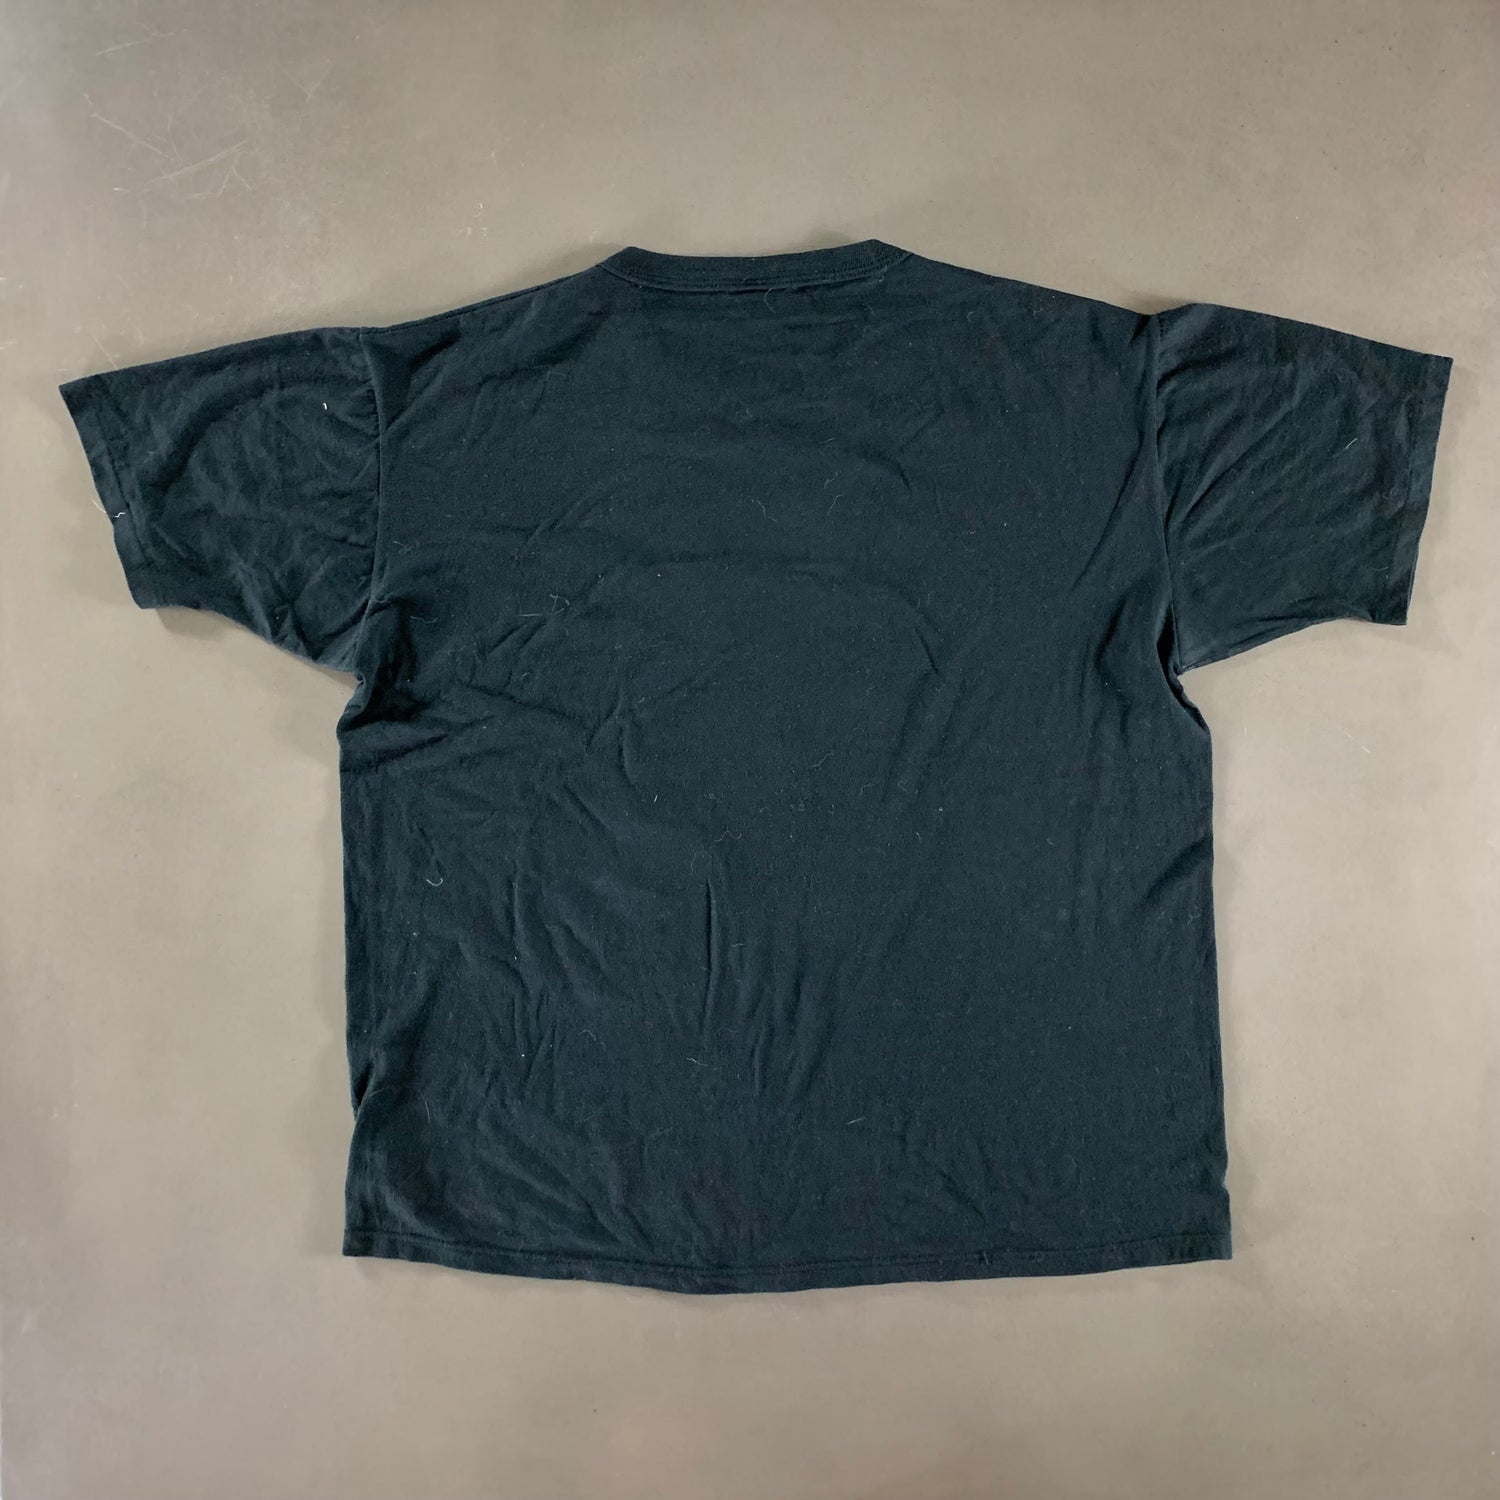 Vintage 1990s Bulldogs T-shirt size XL